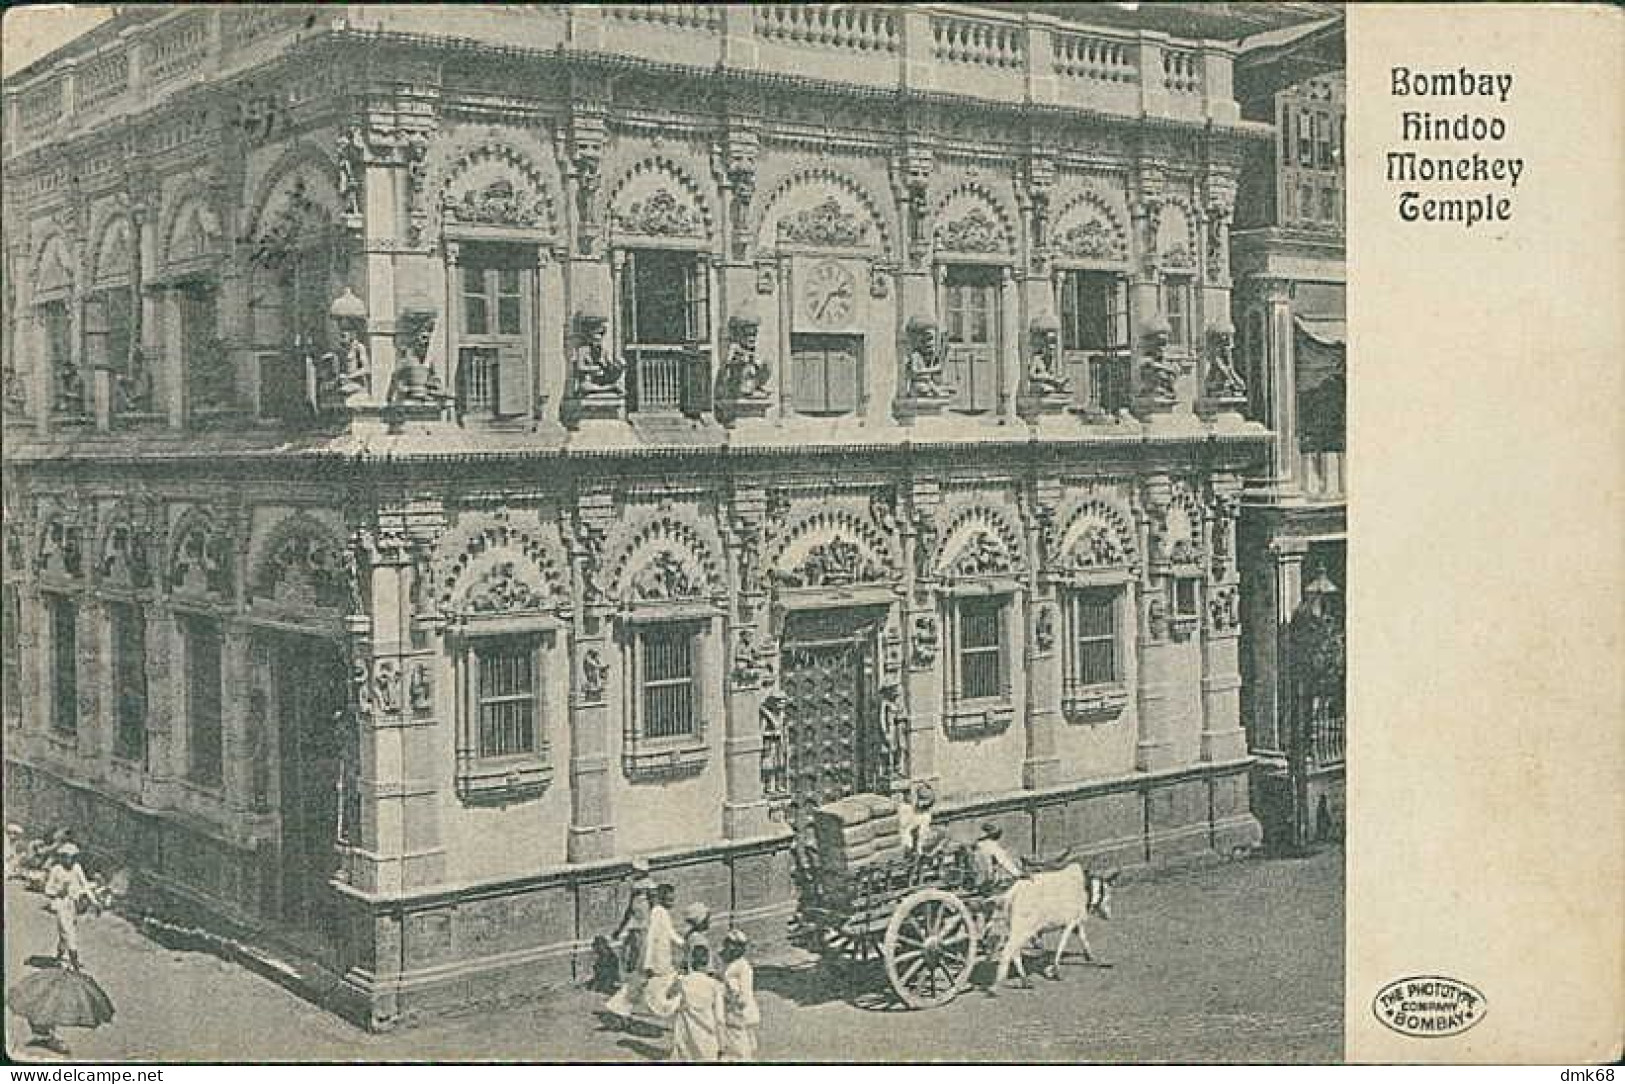 INDIA - BOMBAY HINDU MONKEY TEMPLE - EDIT THE PHOTOTYPE COMPANY - MAILED TO ITALY 1914 / STAMP (18382) - India